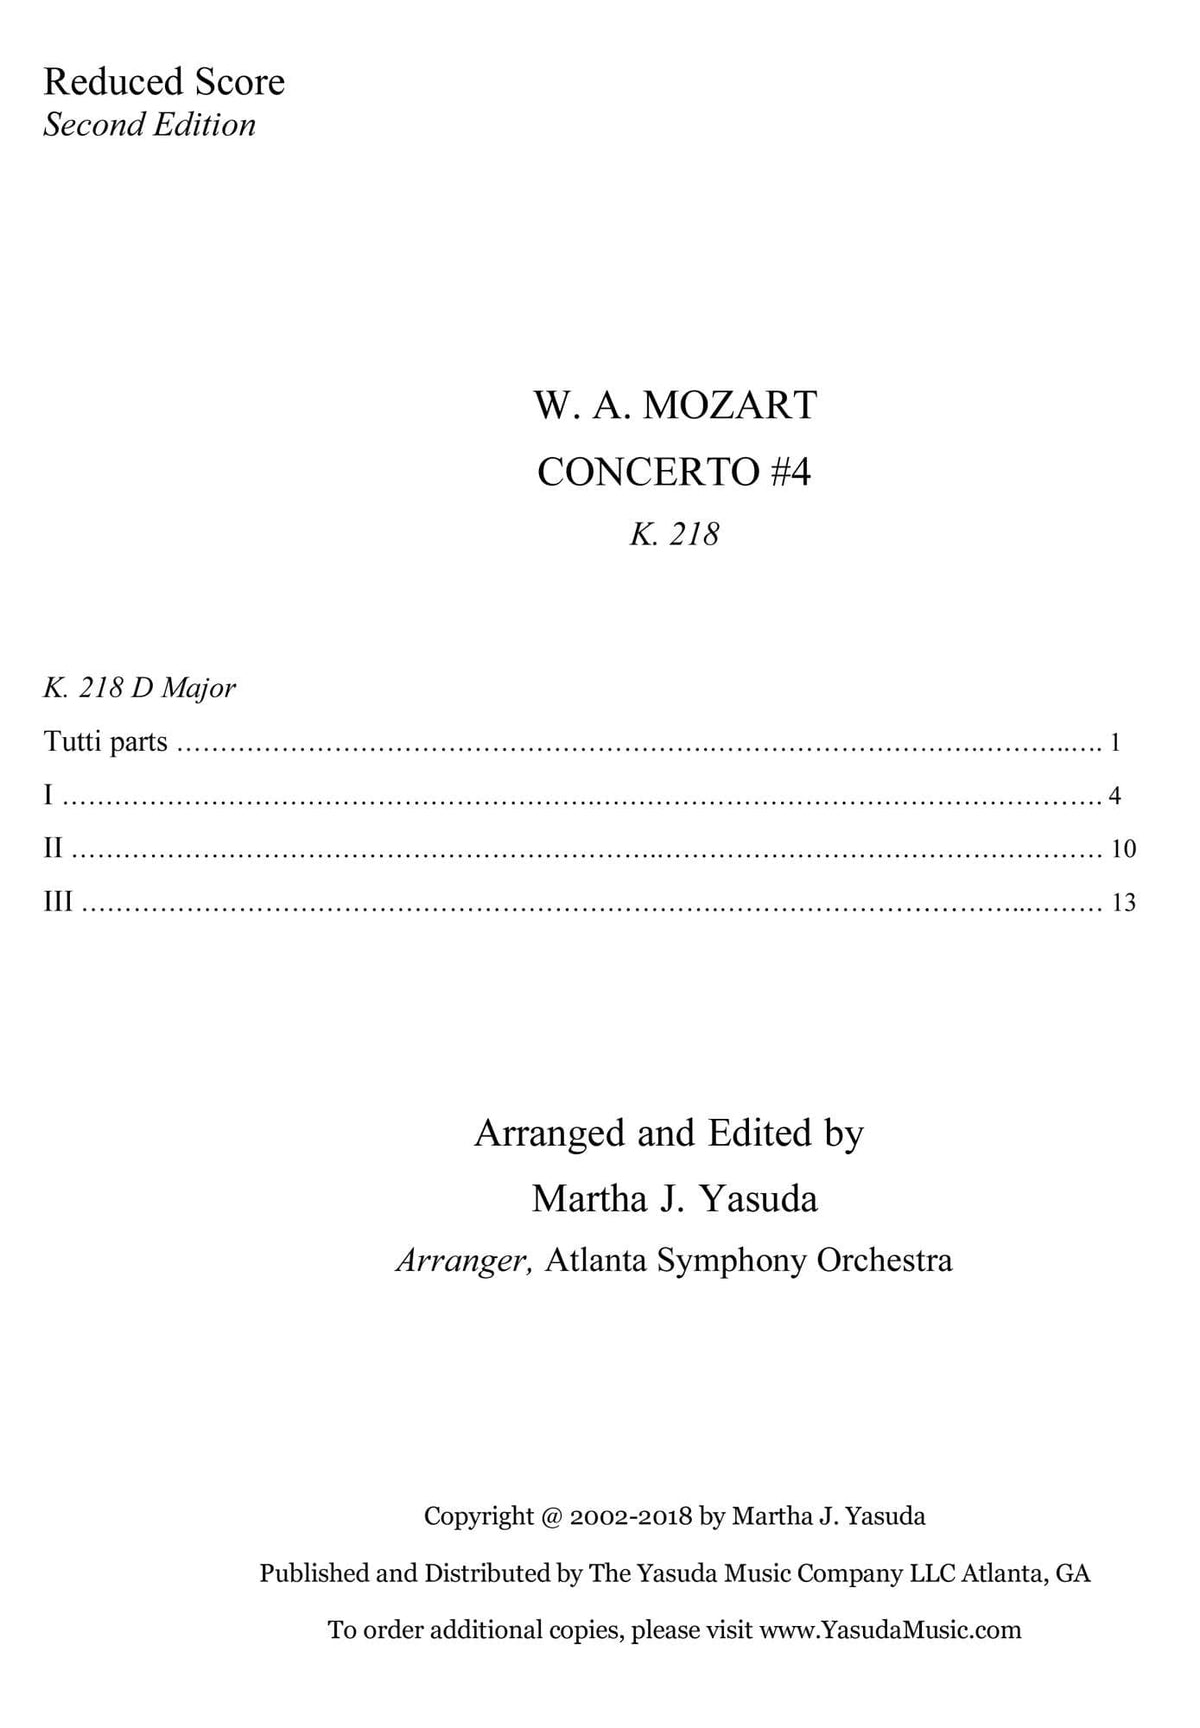 Yasuda, Martha - Mozart Concerti No. 4 for Two or Three Violins - Digital Download